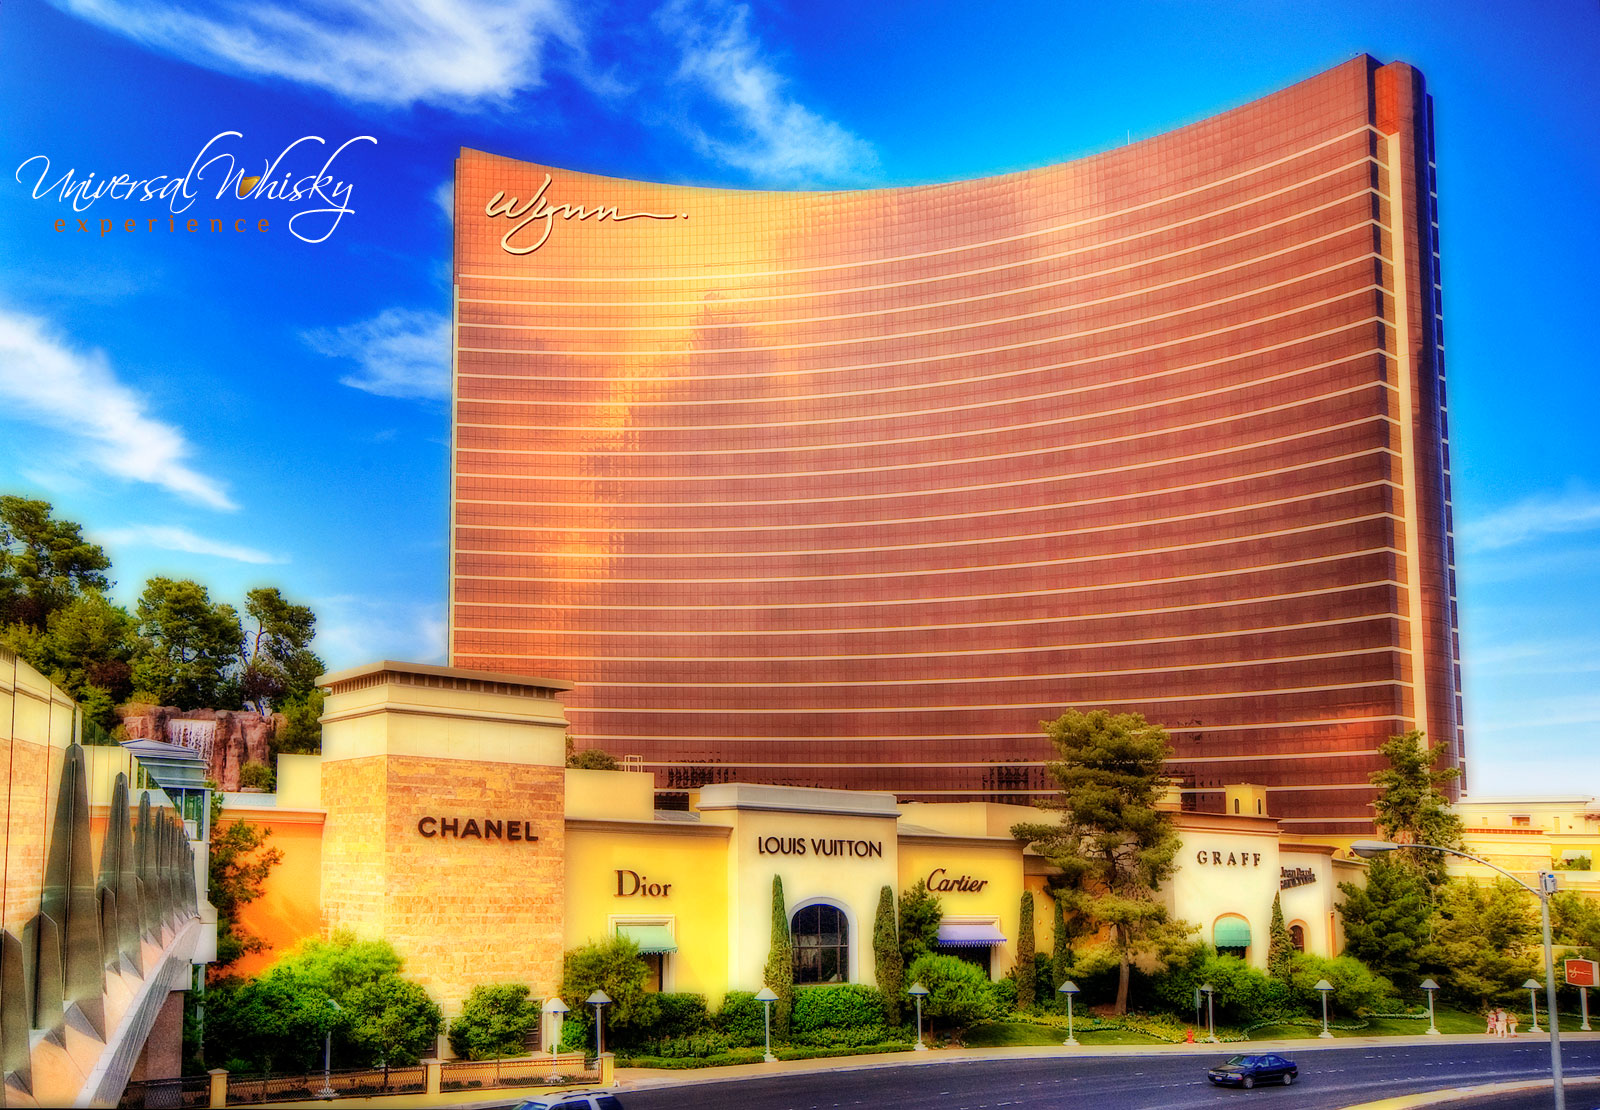 Wynn Resort Las Vegas - Universal Whisky Experience